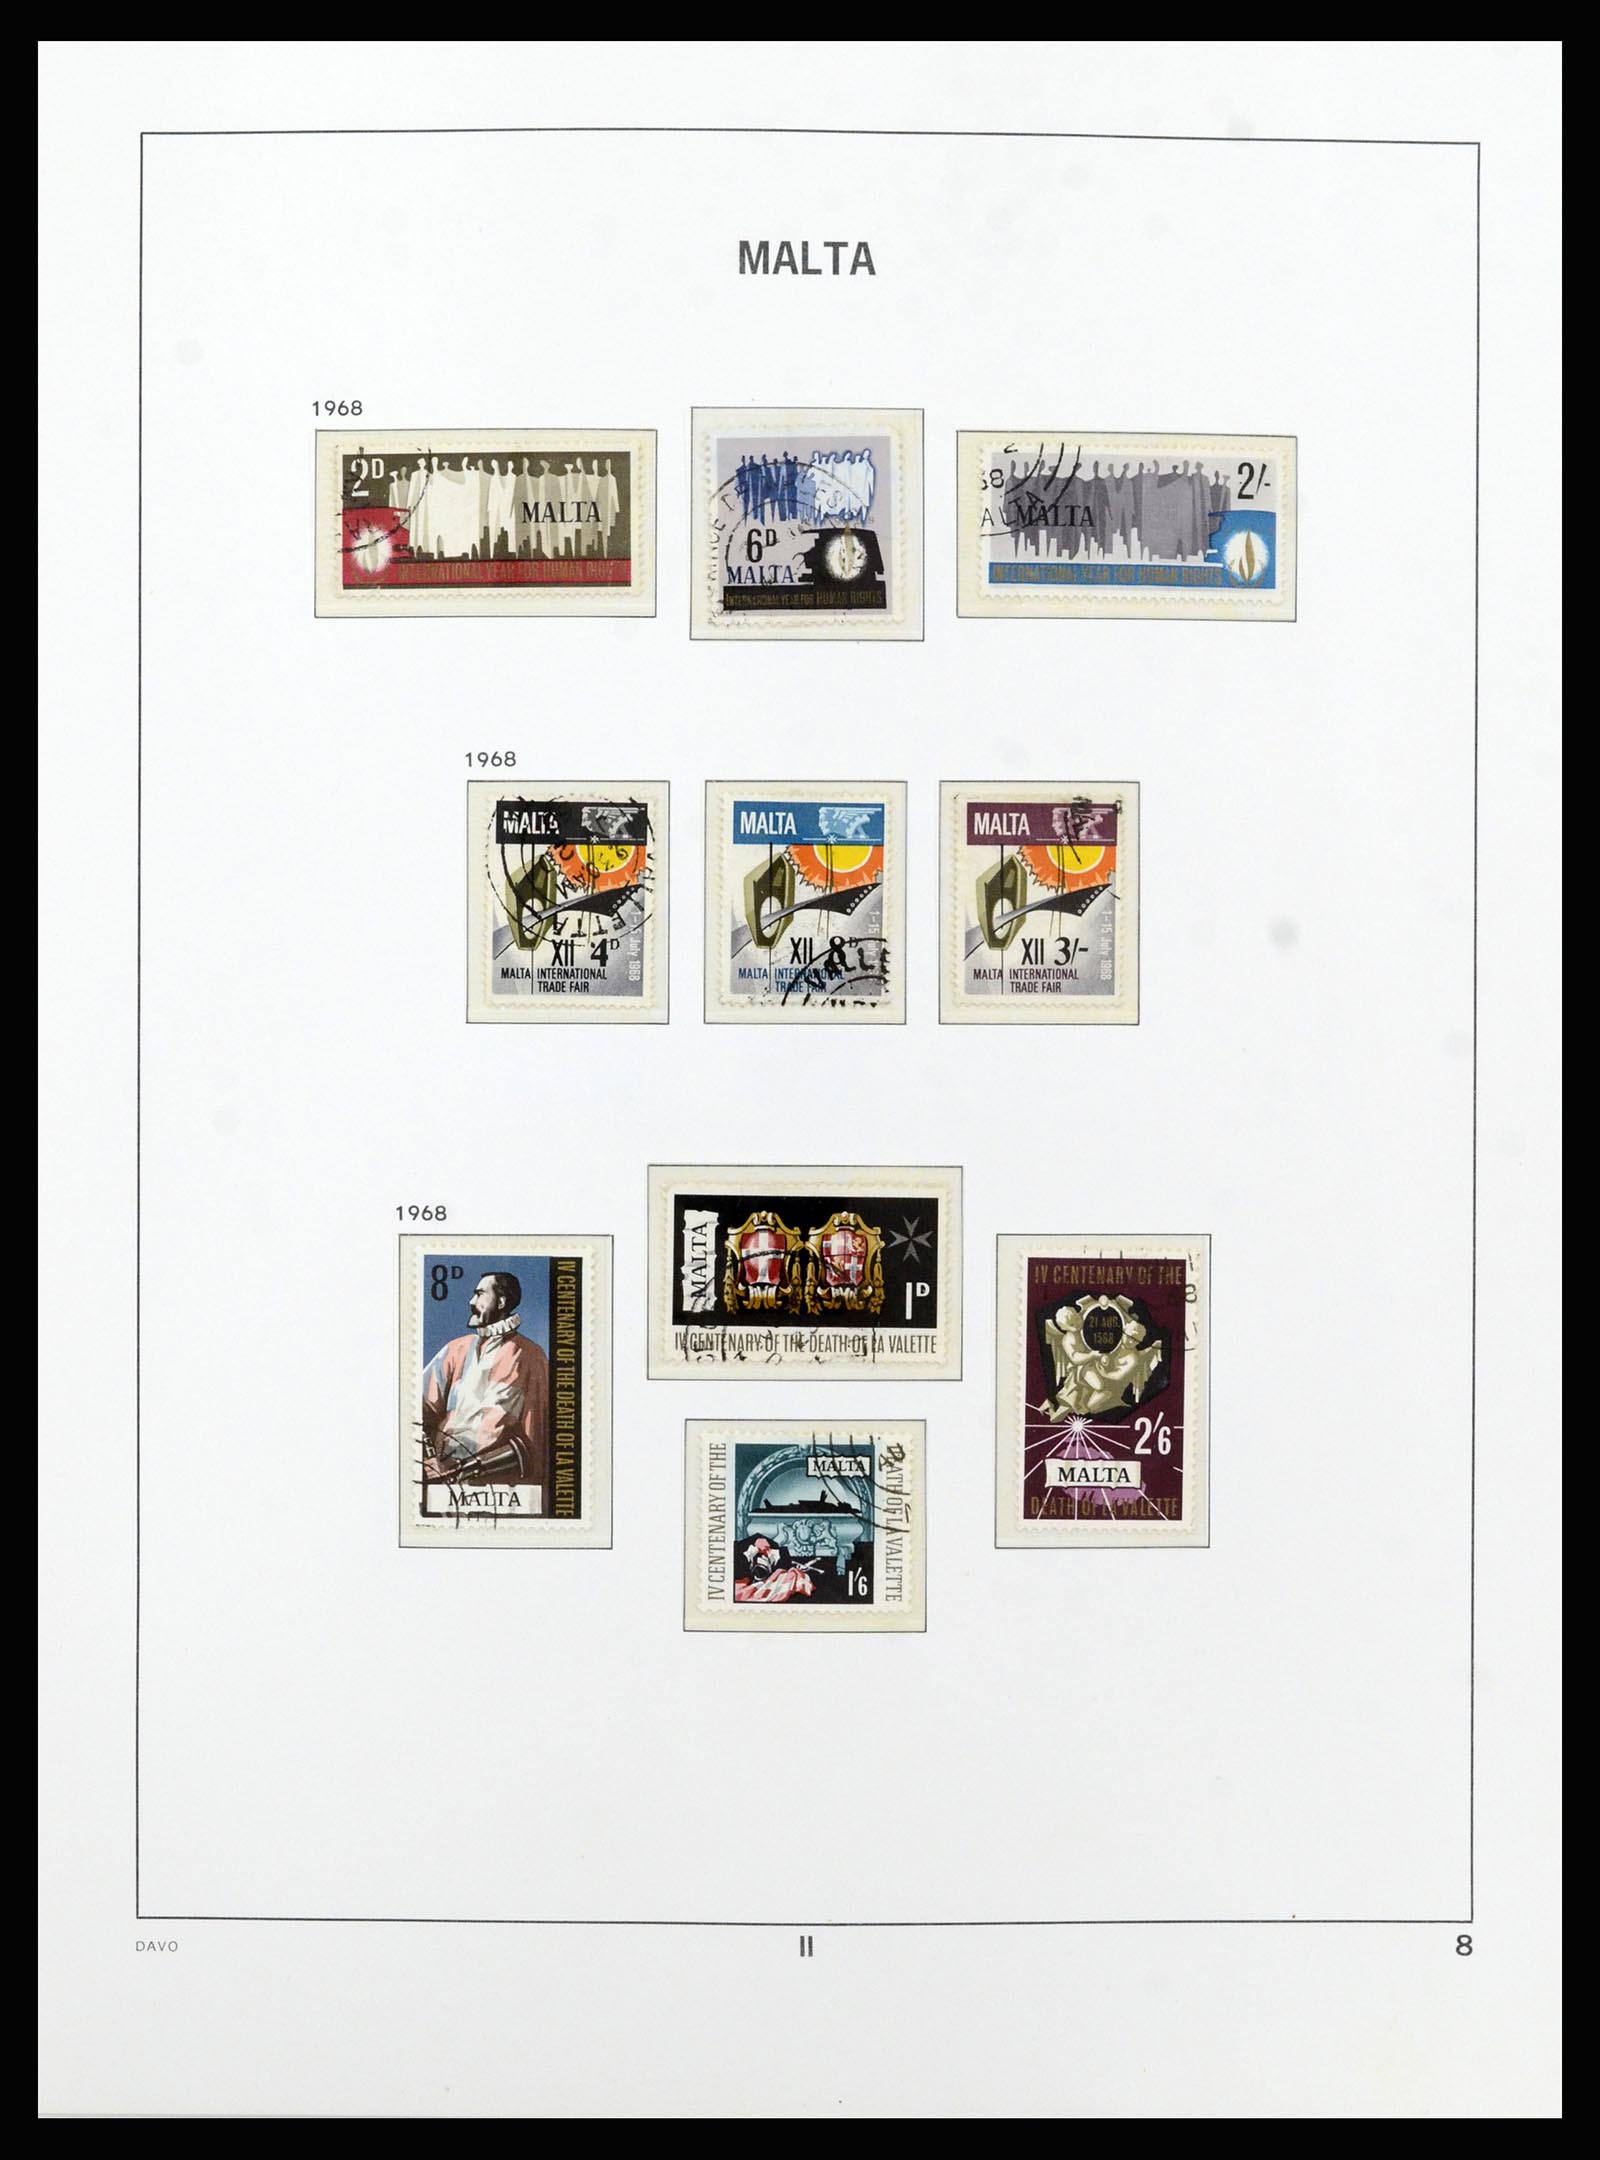 37212 032 - Stamp collection 37212 Malta 1863-1989.